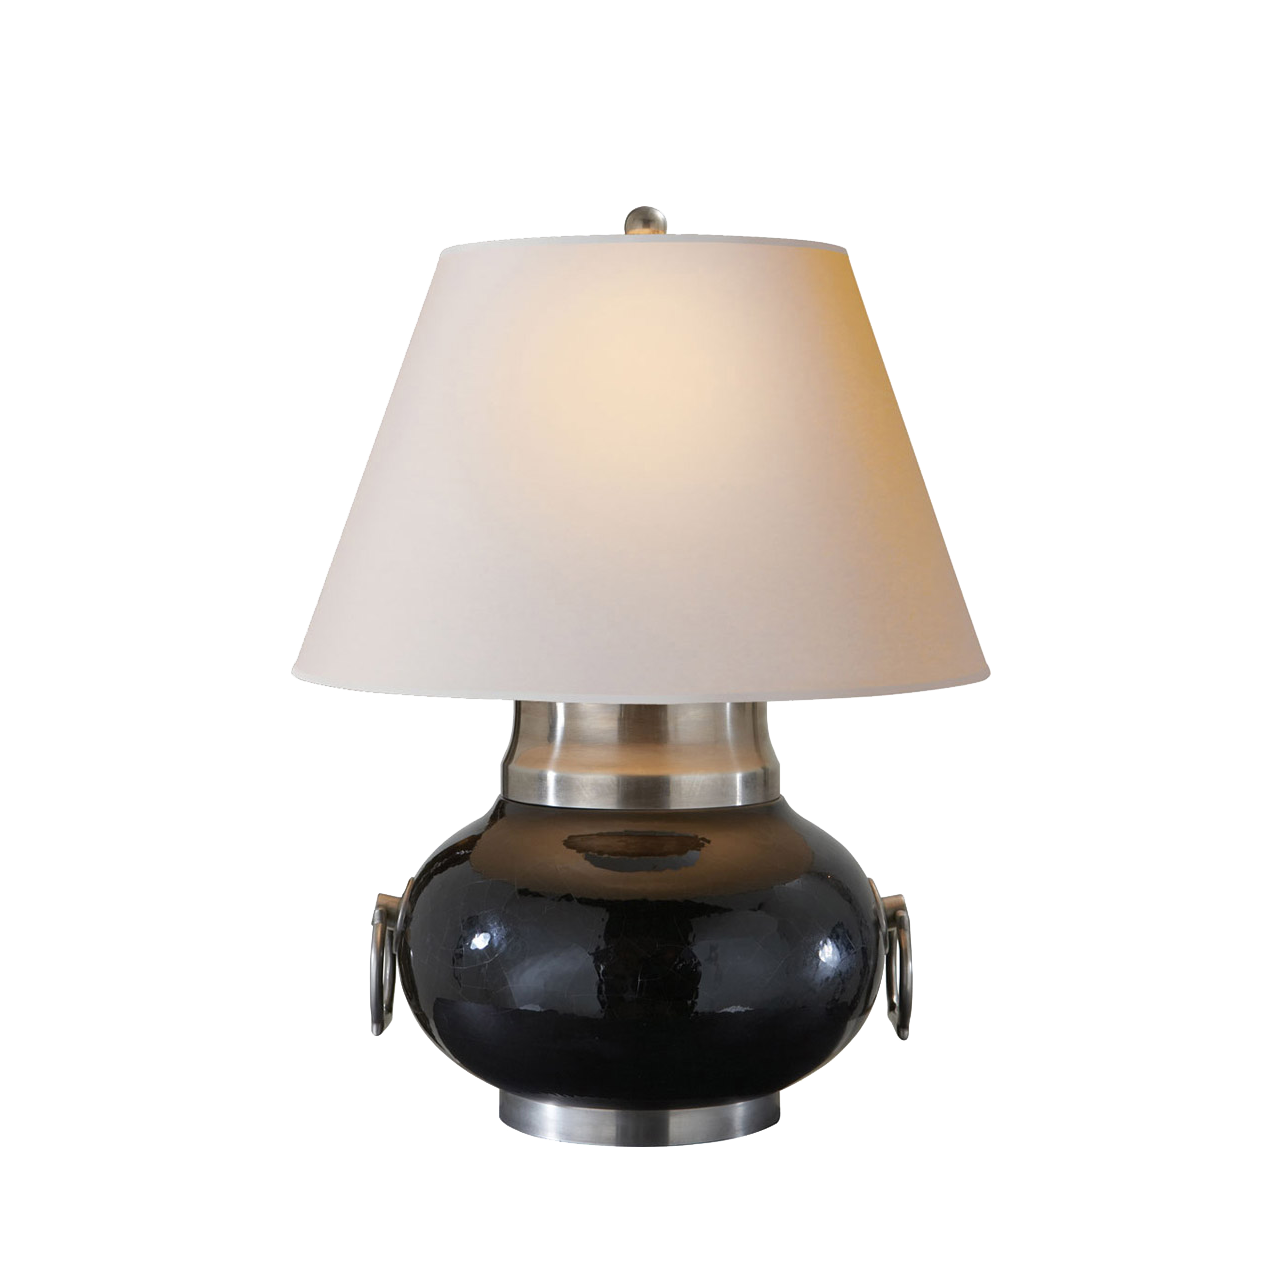 Black Ceramic Table Lamp Table Lamp Idea